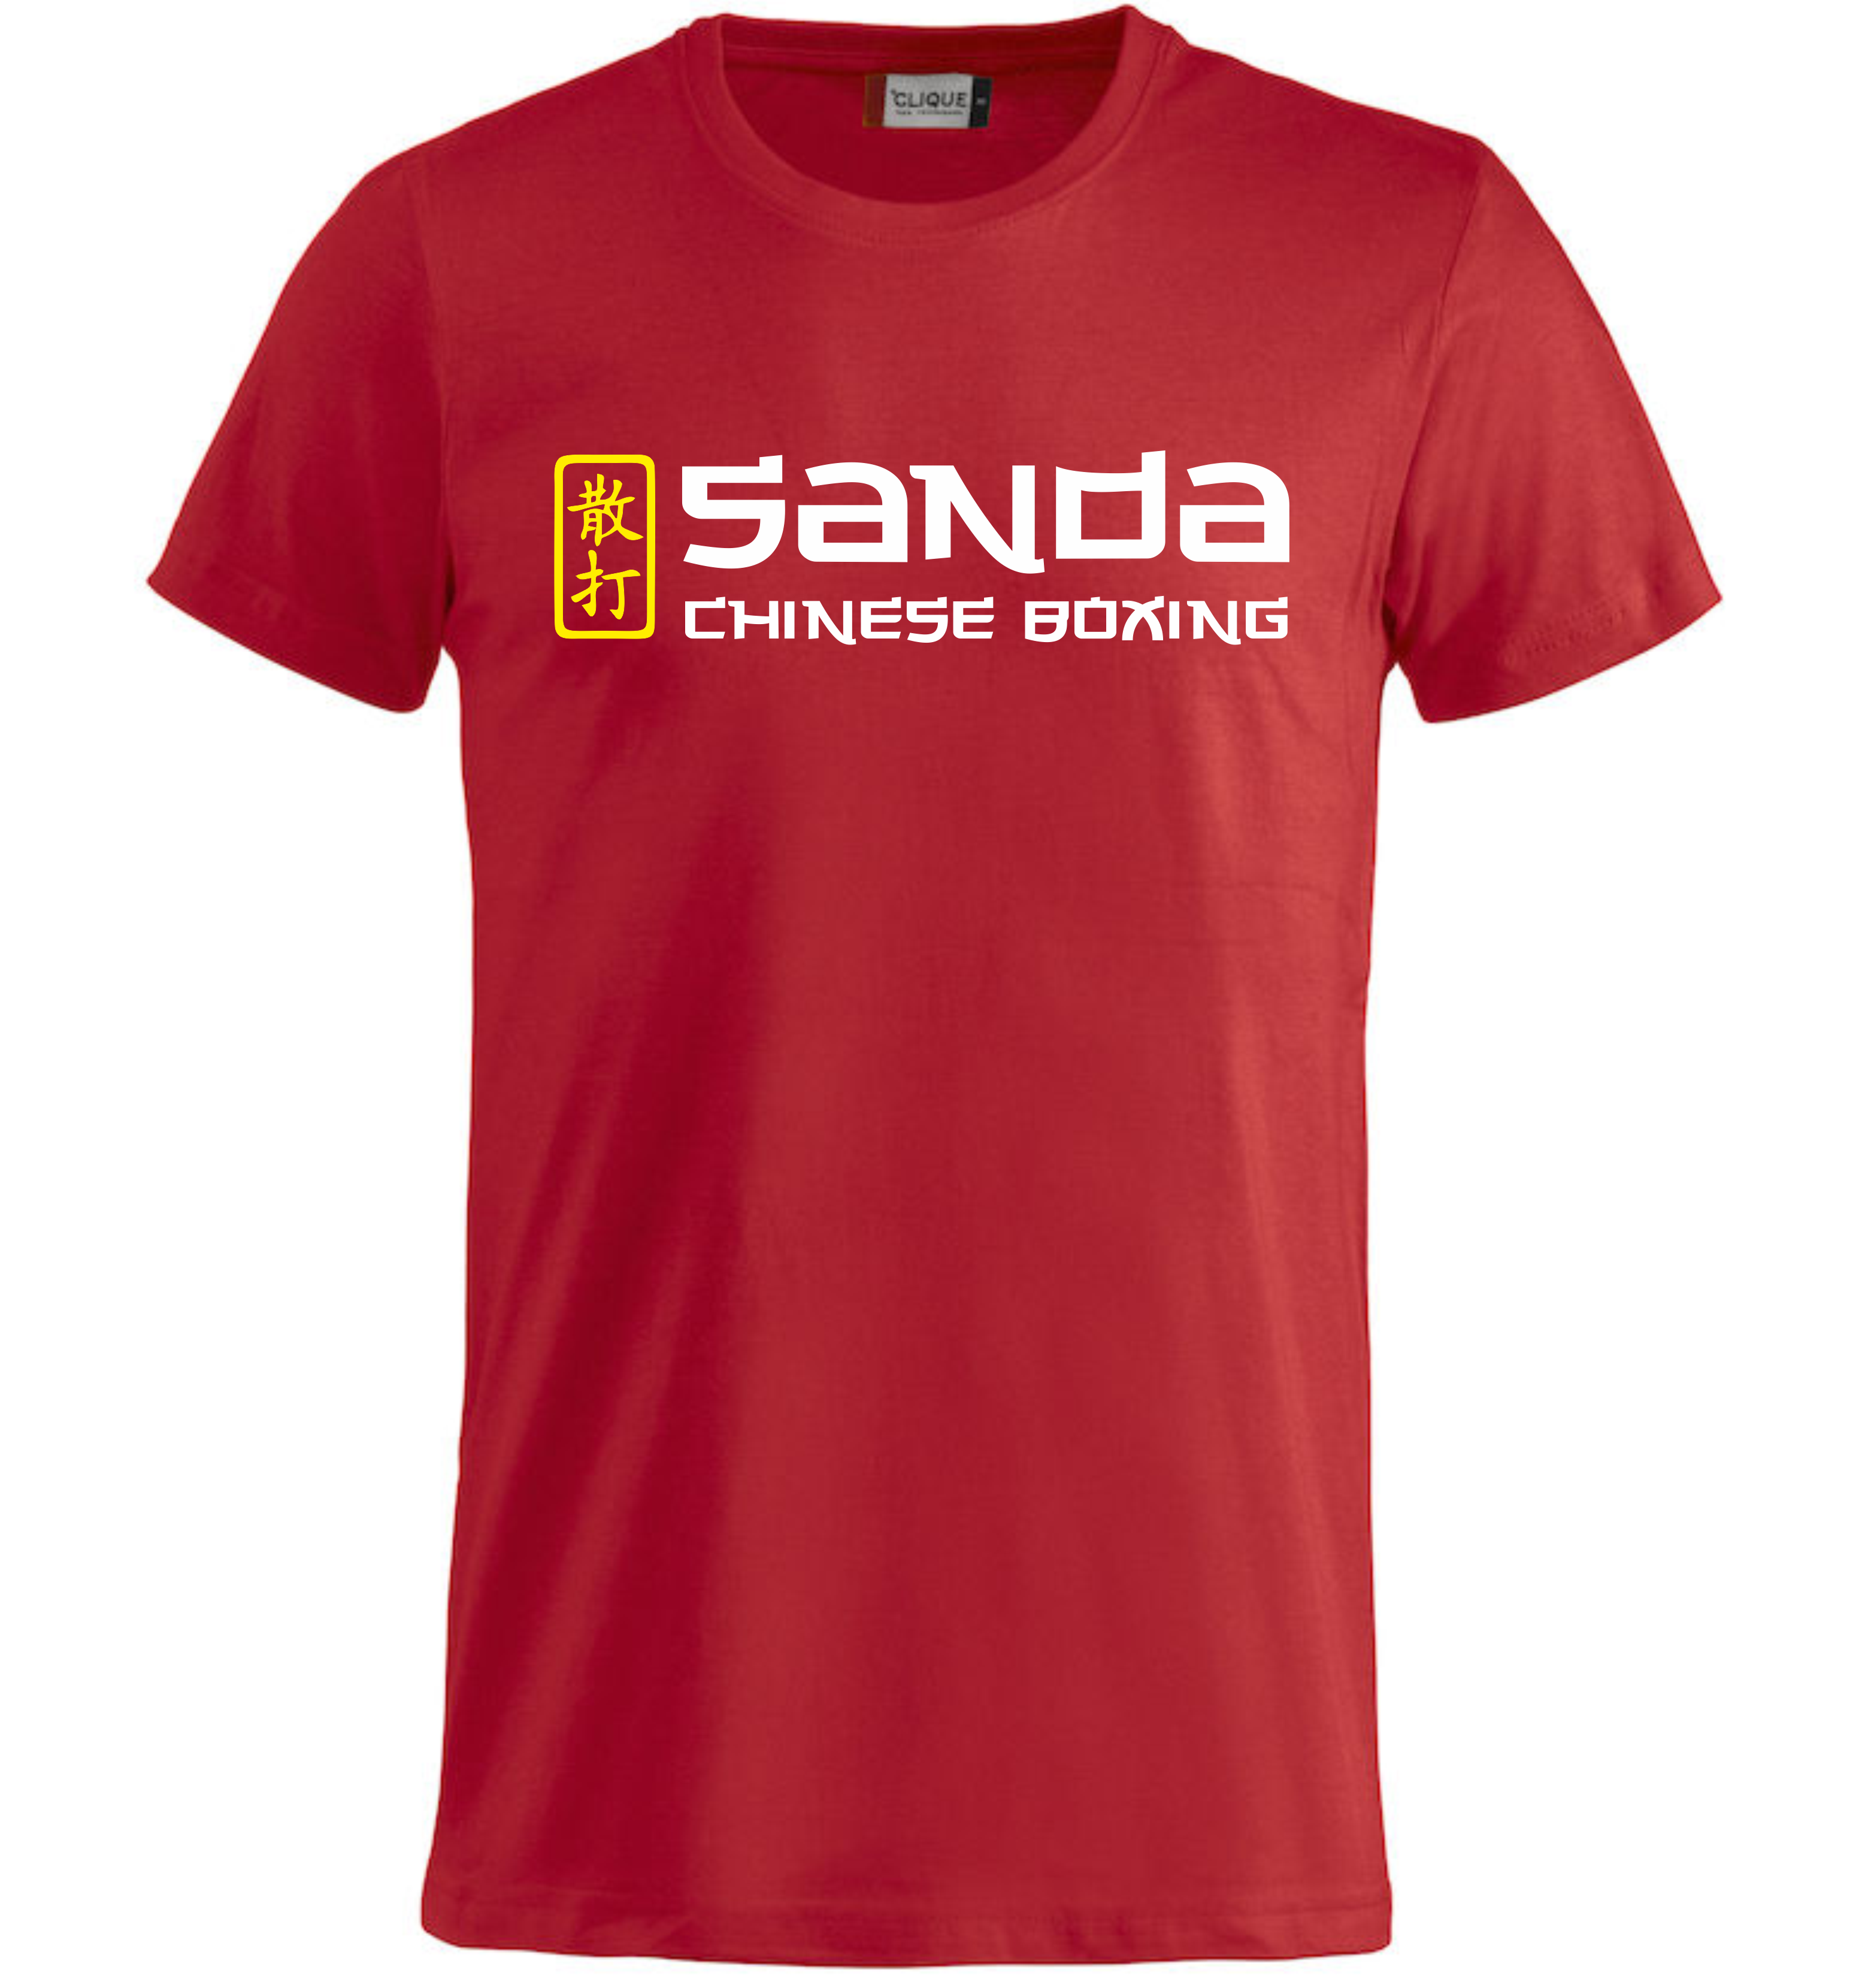 Sanda T-Shirt Freizeit rot